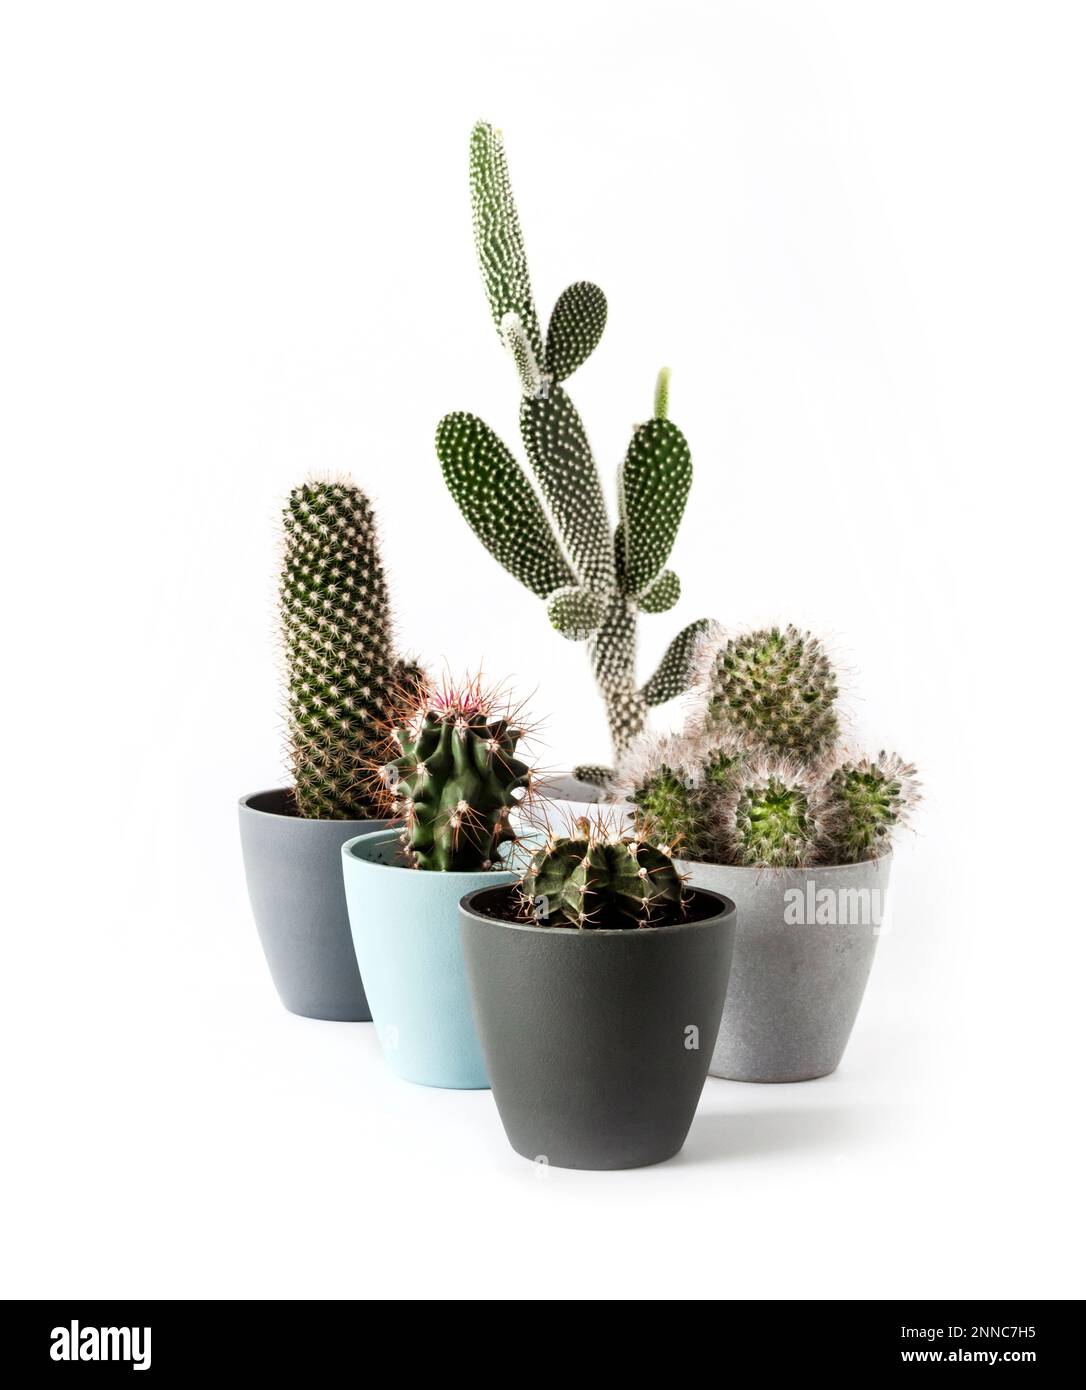 Variety of potted cacti (Gymnocalycium mihanovichii, Mammillaria, Opuntia microdasys) isolated on white background. Copy space Stock Photo